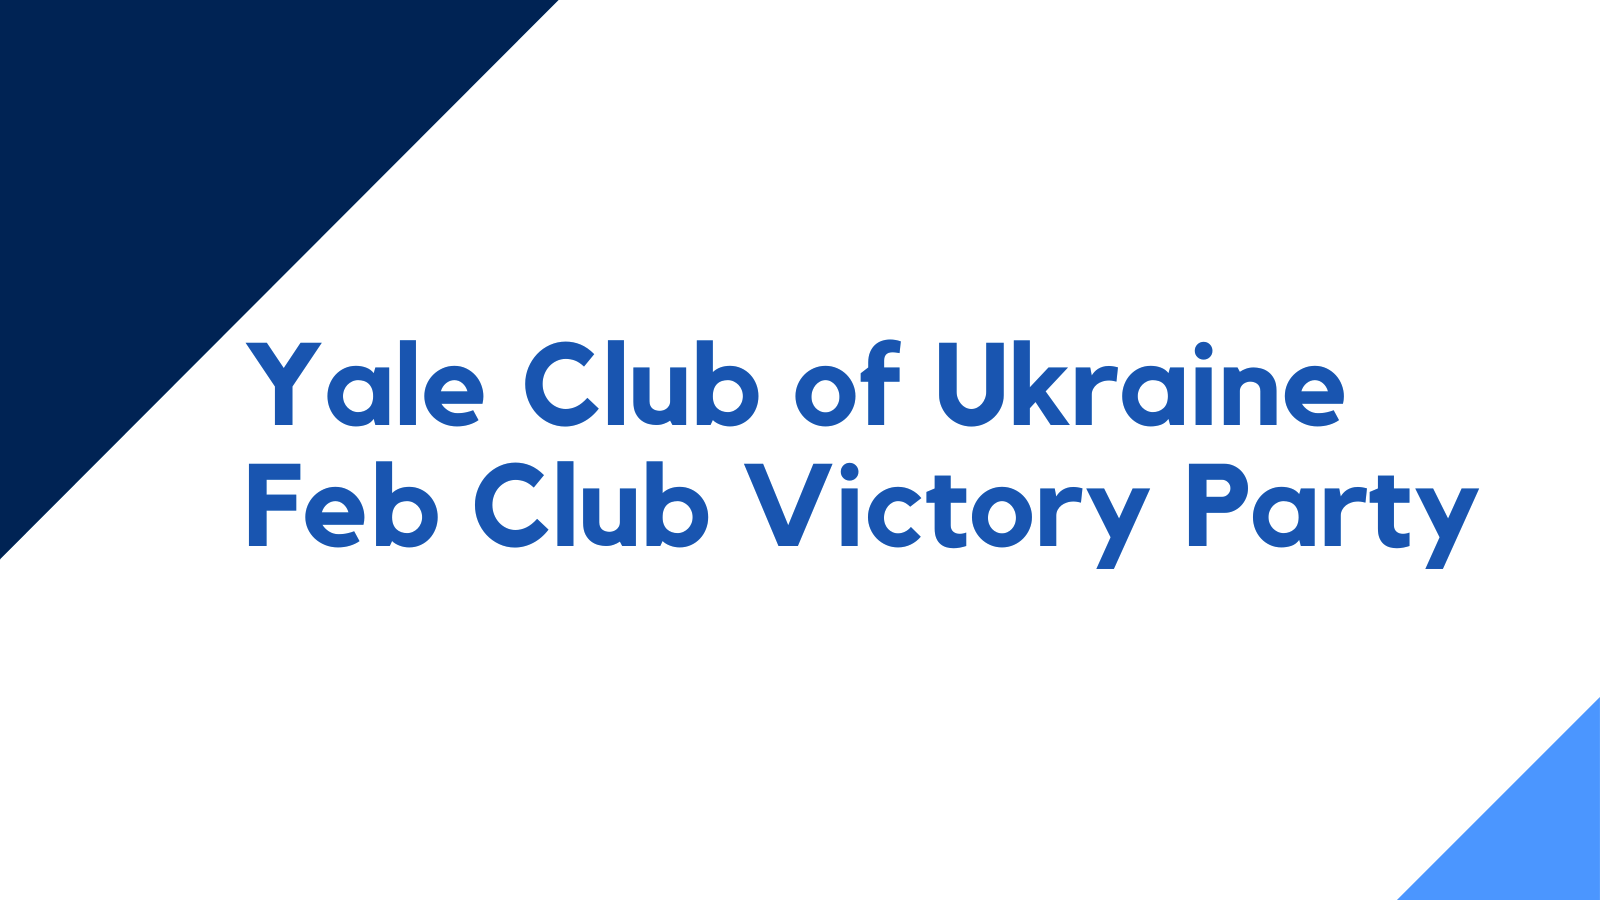 Feb Club Ukraine